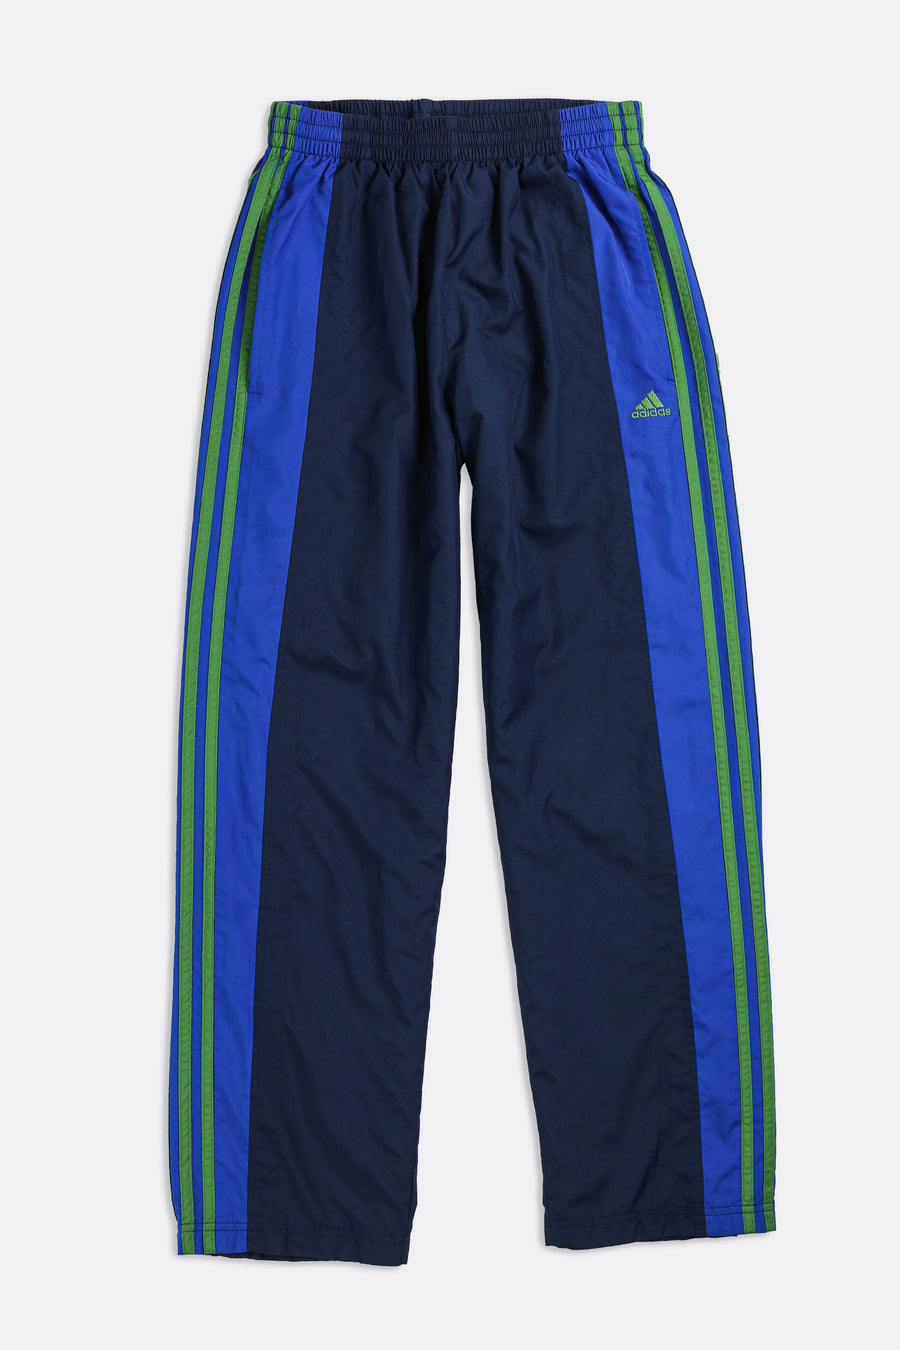 Vintage Adidas Windbreaker Pants - XS